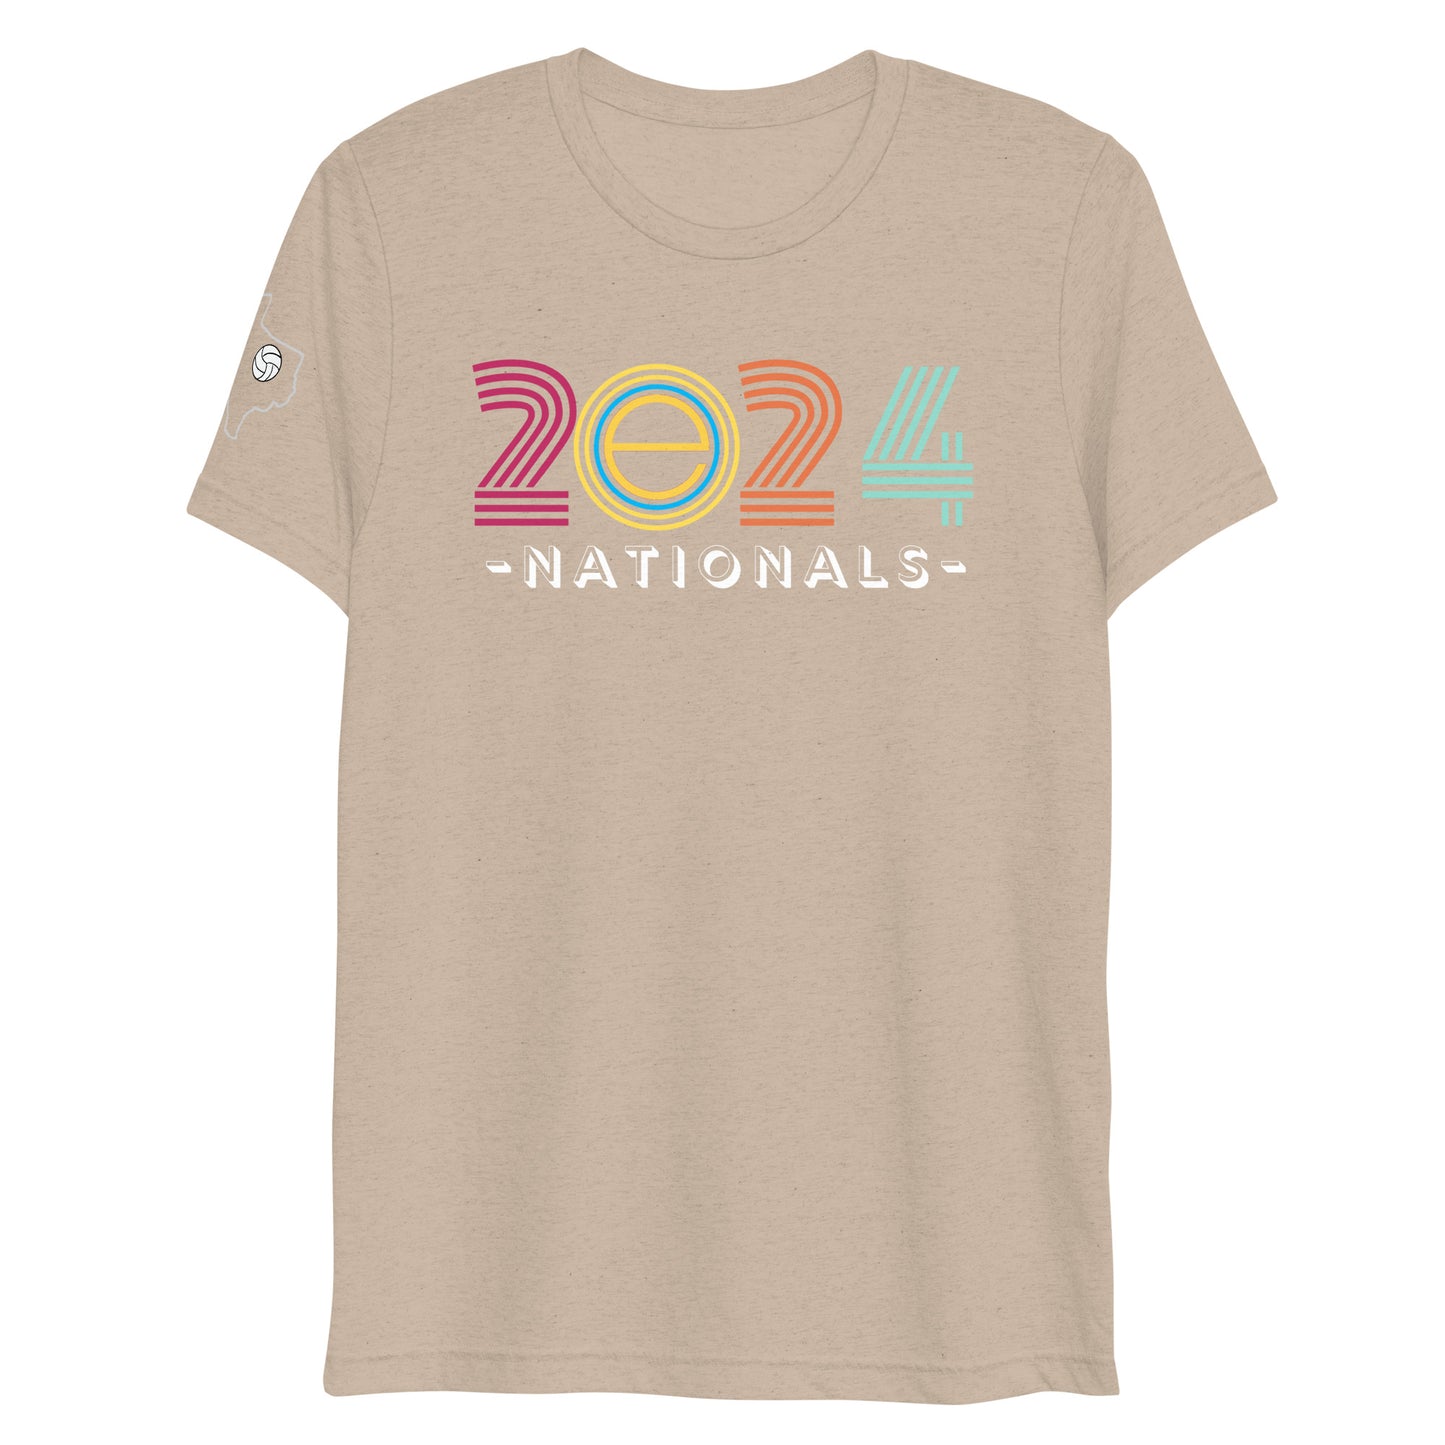 ExcelNationalsShort sleeve t-shirt